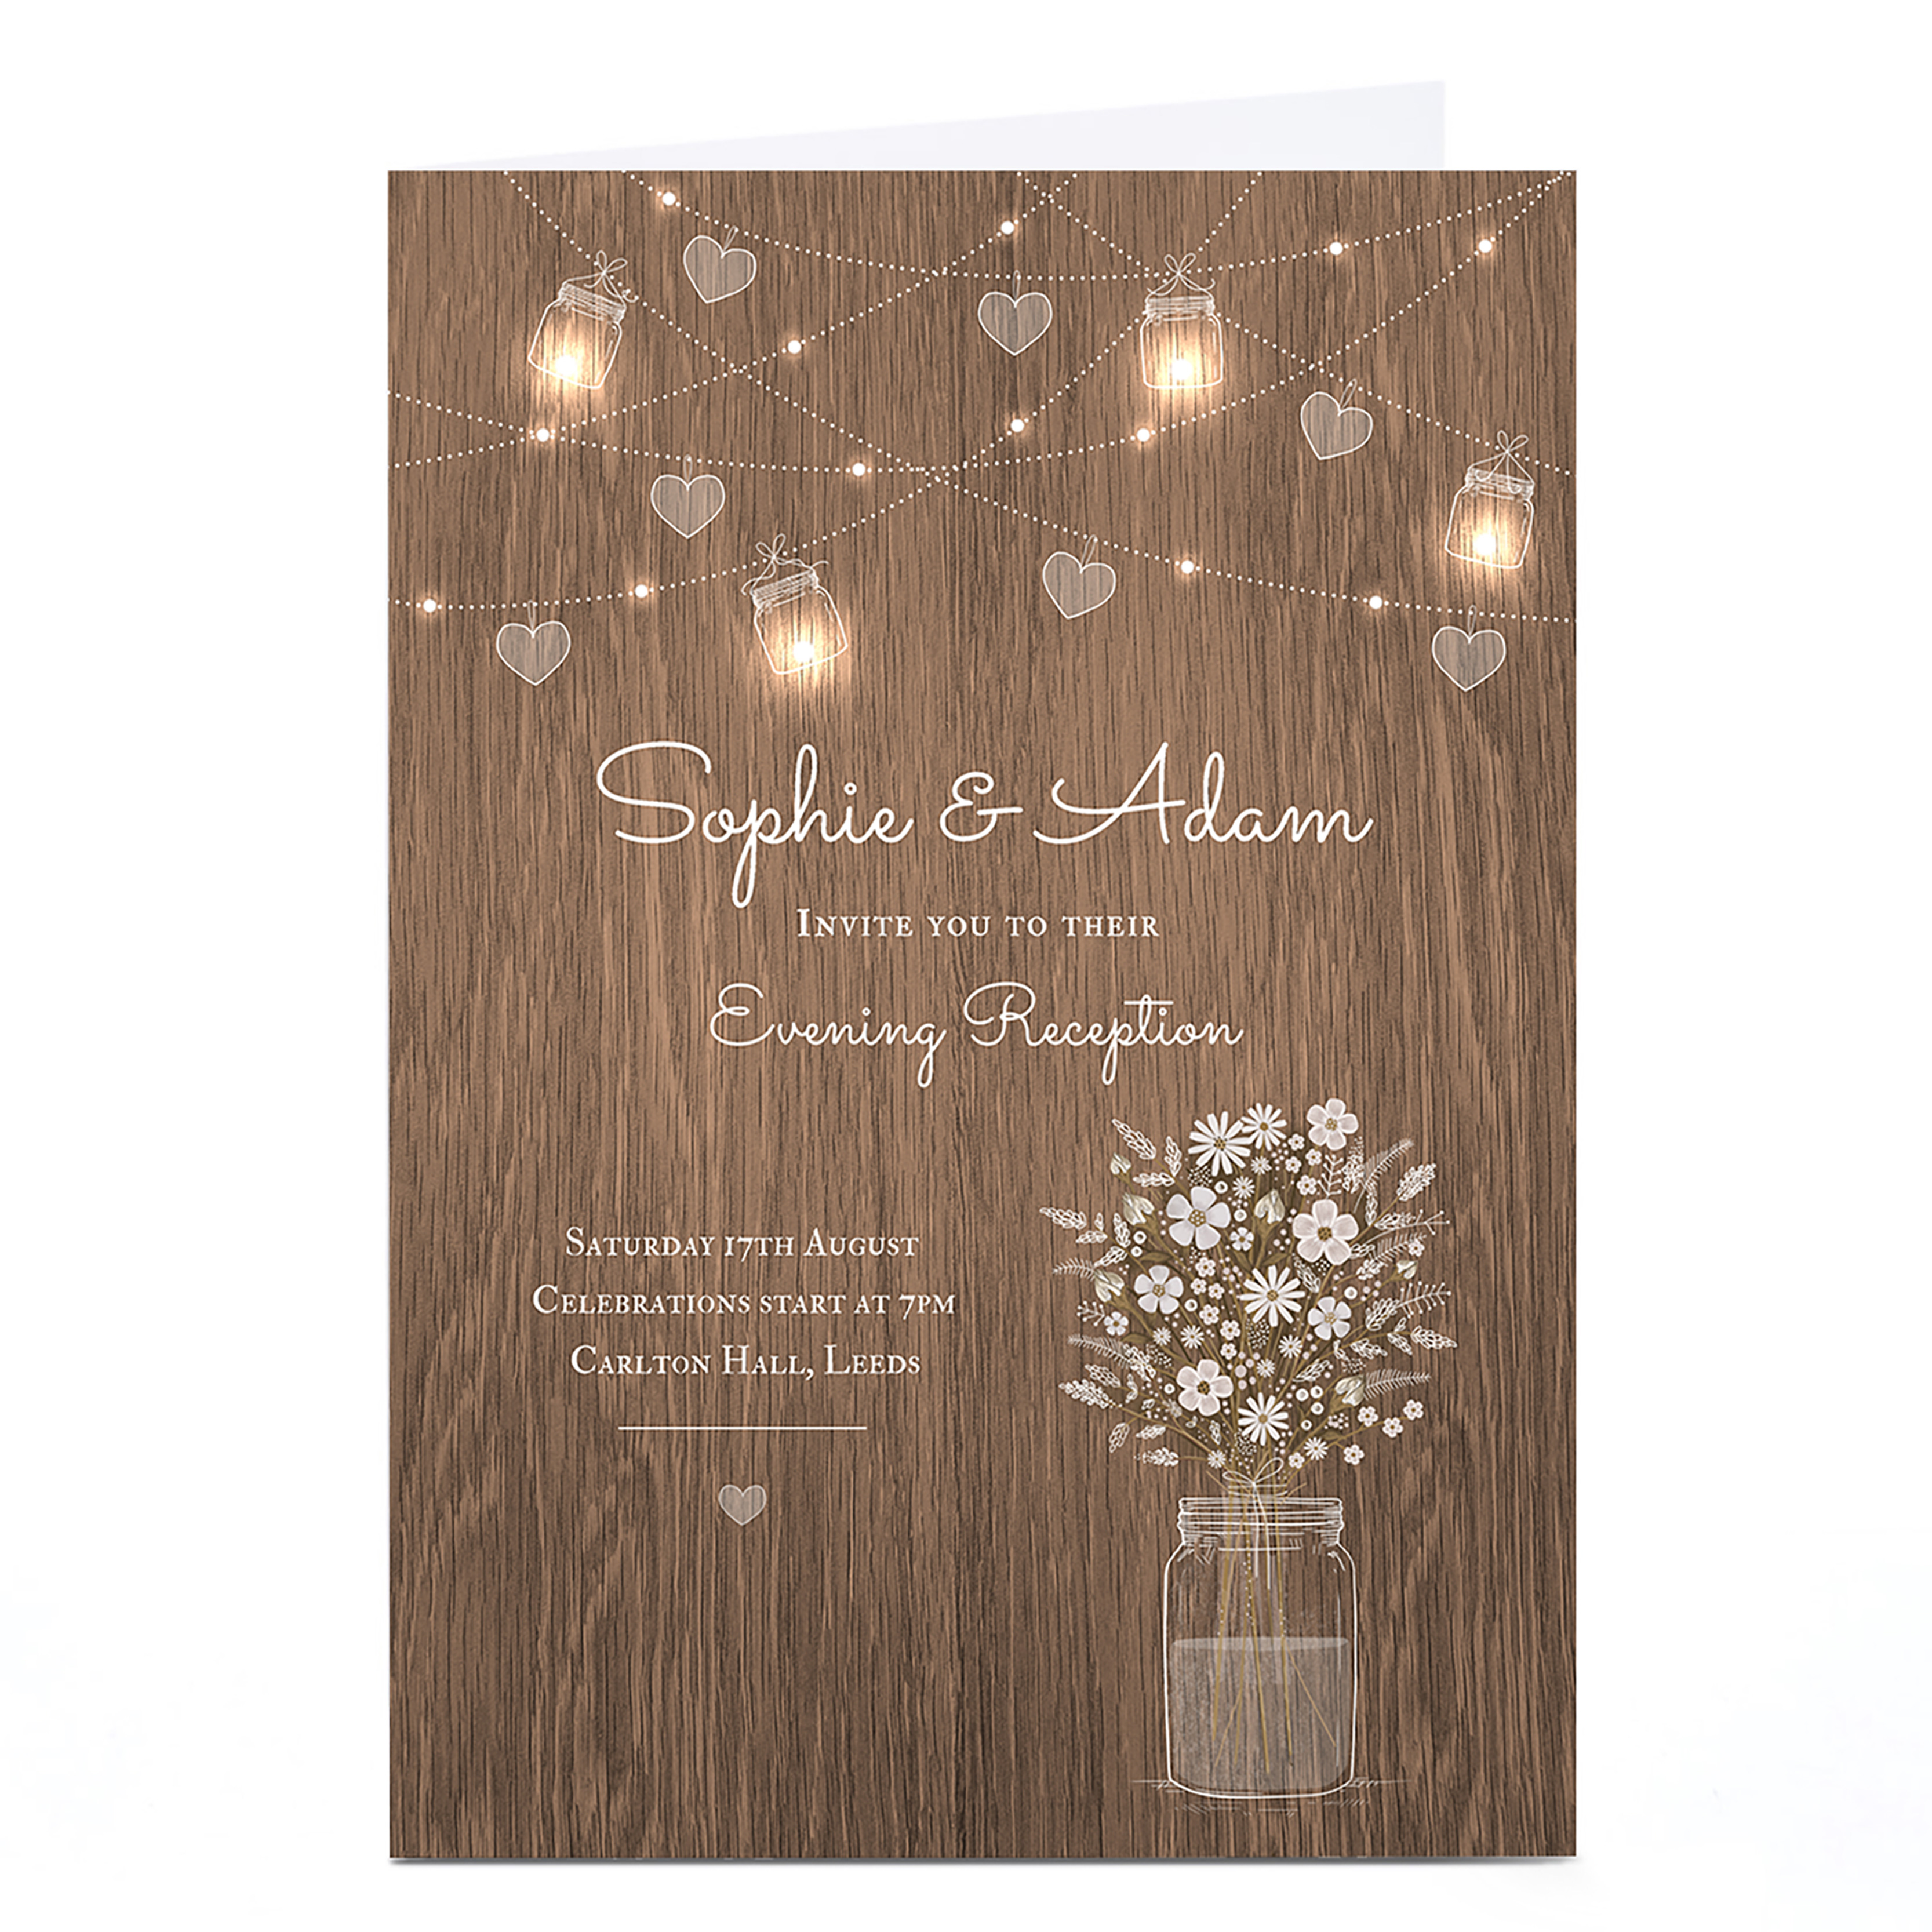 Personalised Wedding Reception Invitation - Wood Effect